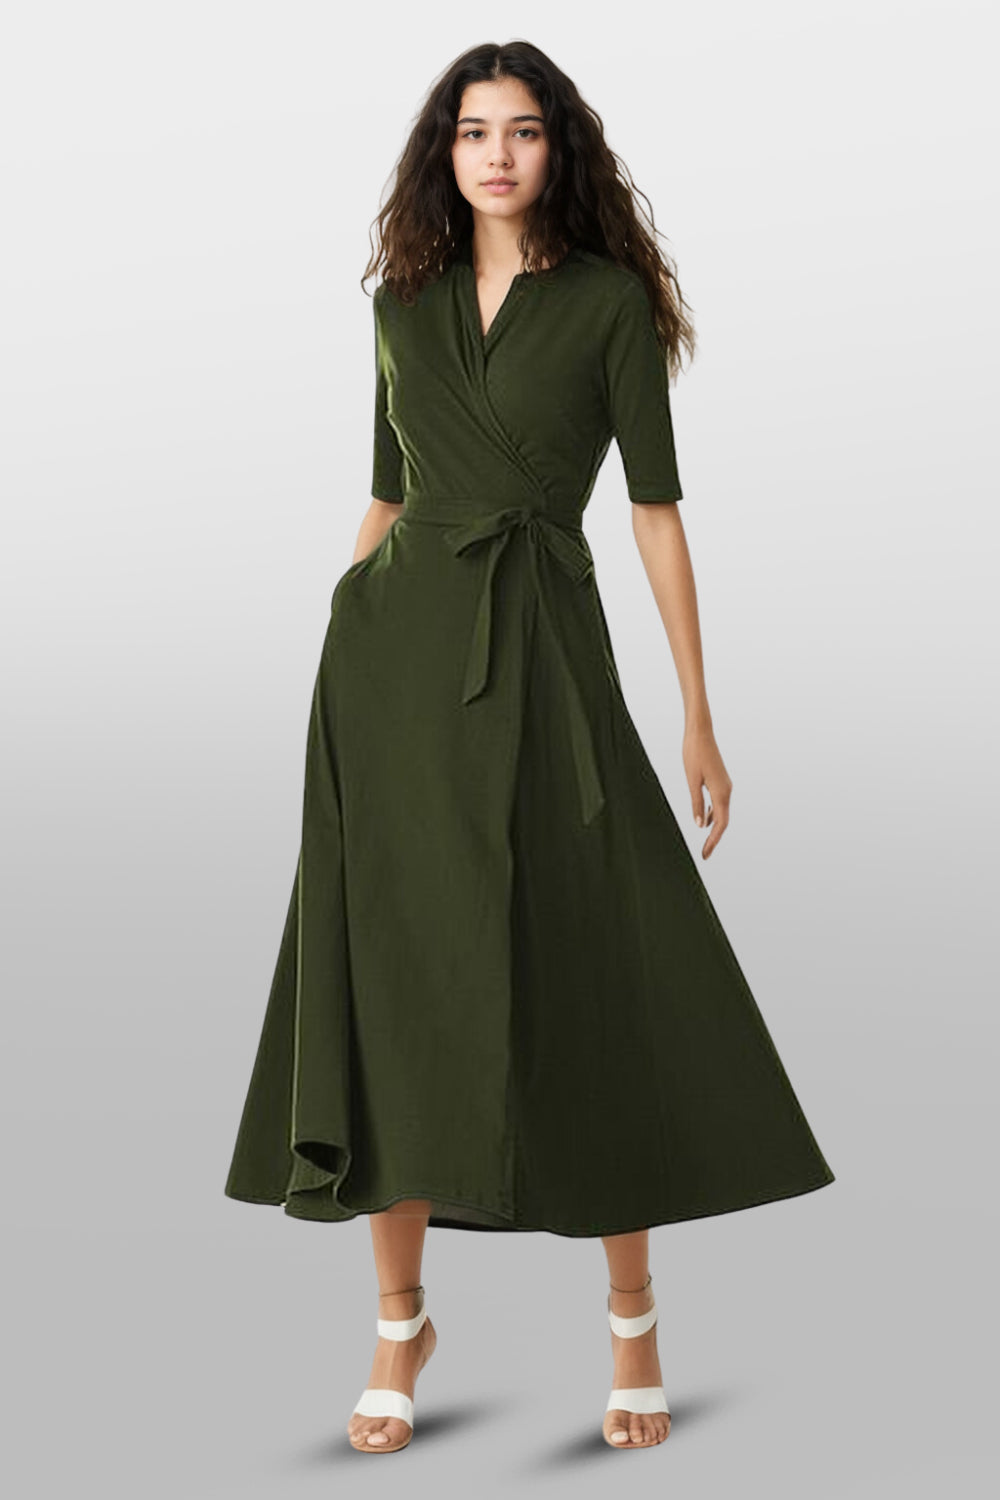 Ava Green Dress